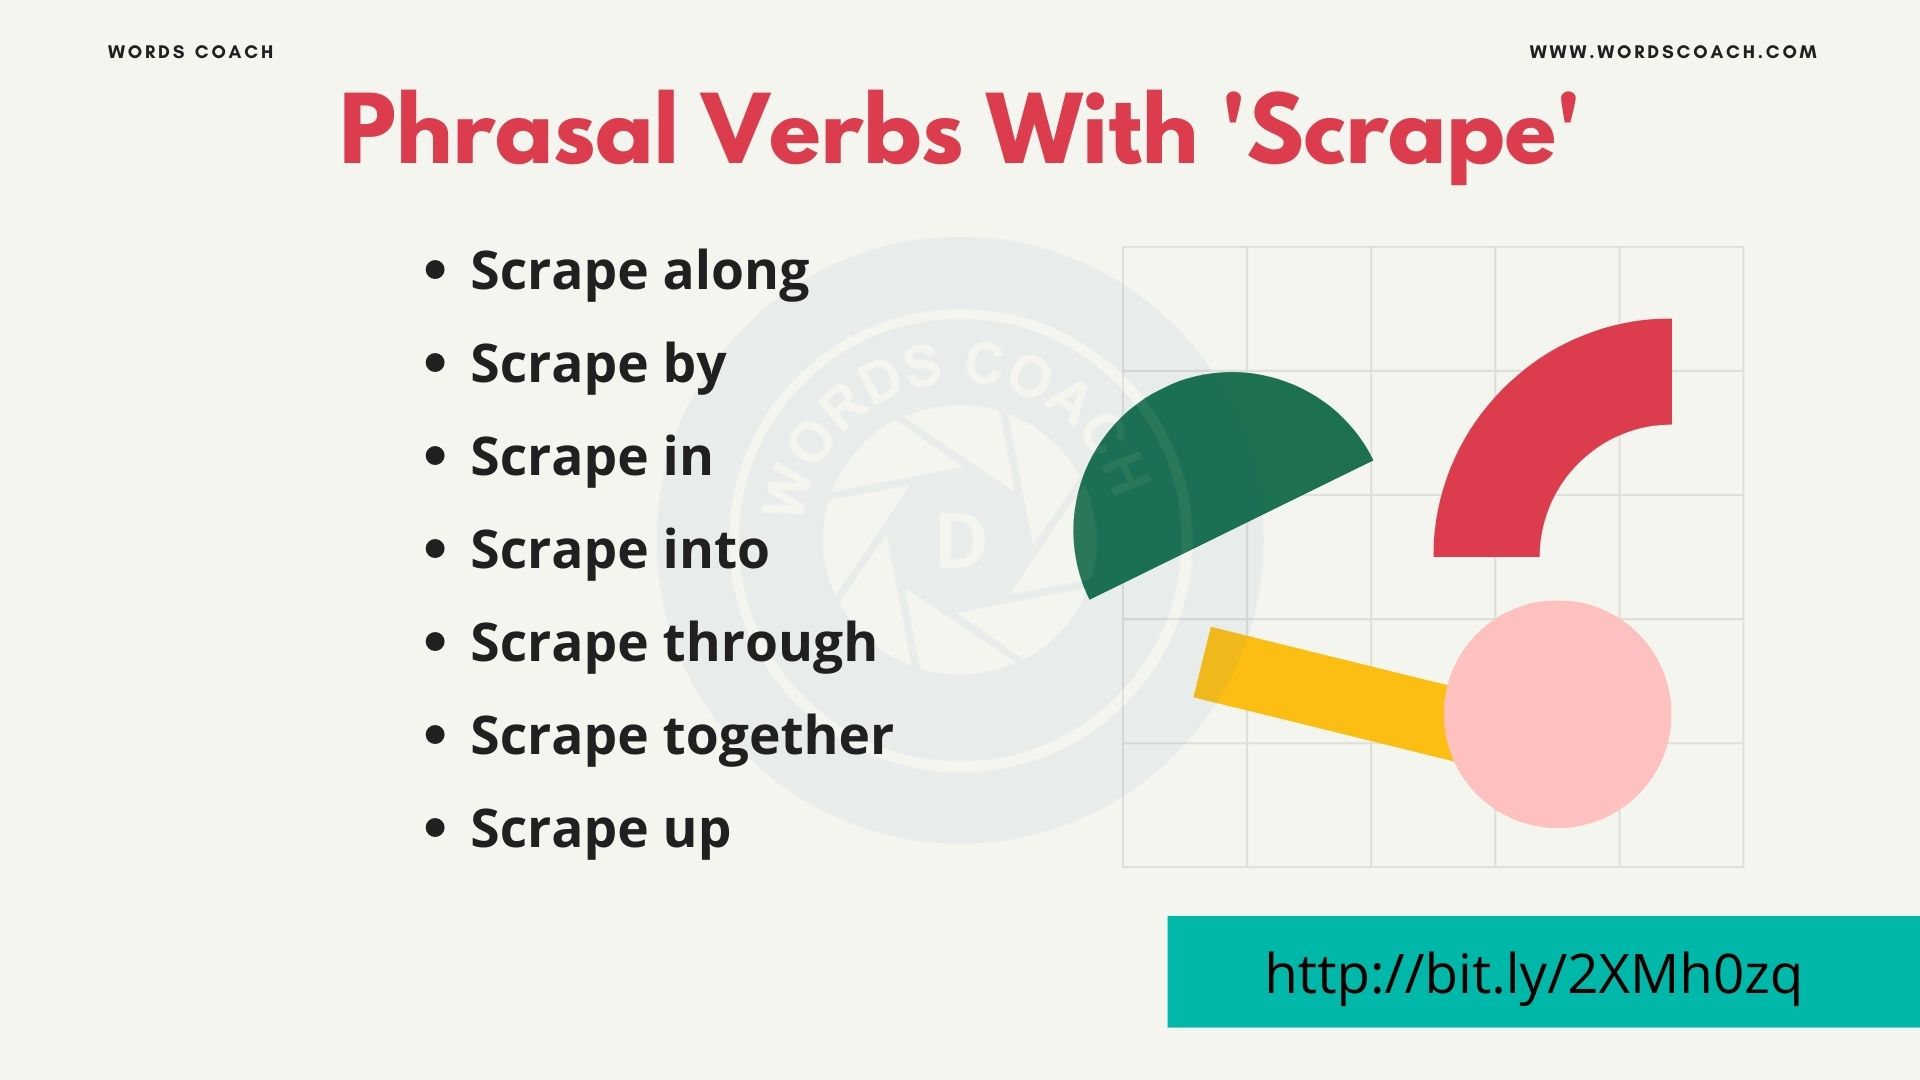 Phrasal Verbs With 'Scrape' - wordscoach.com